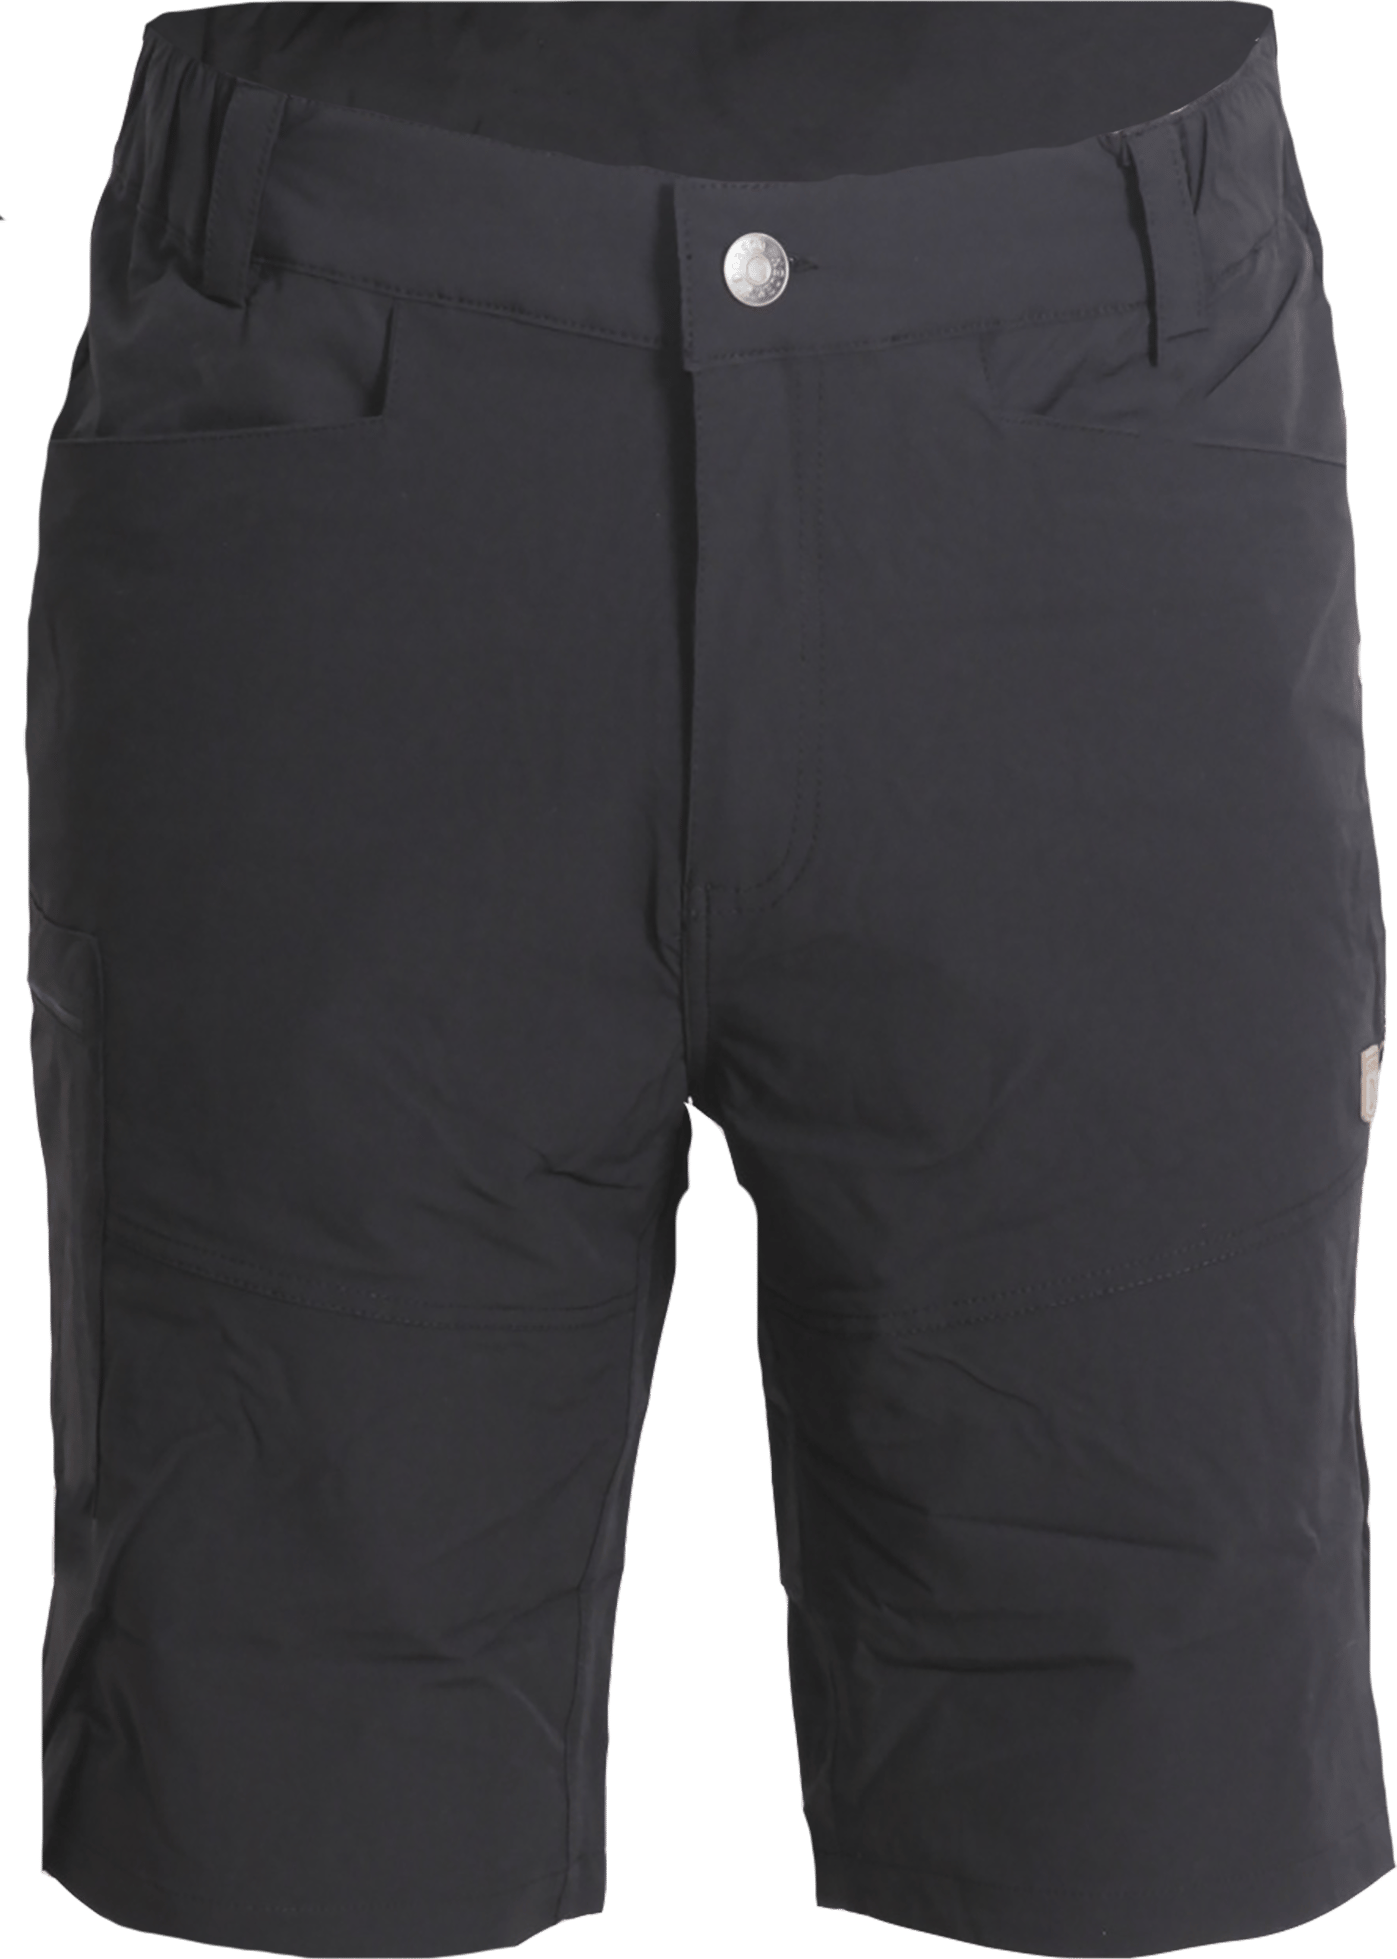 Men's Himalaya Shorts Black